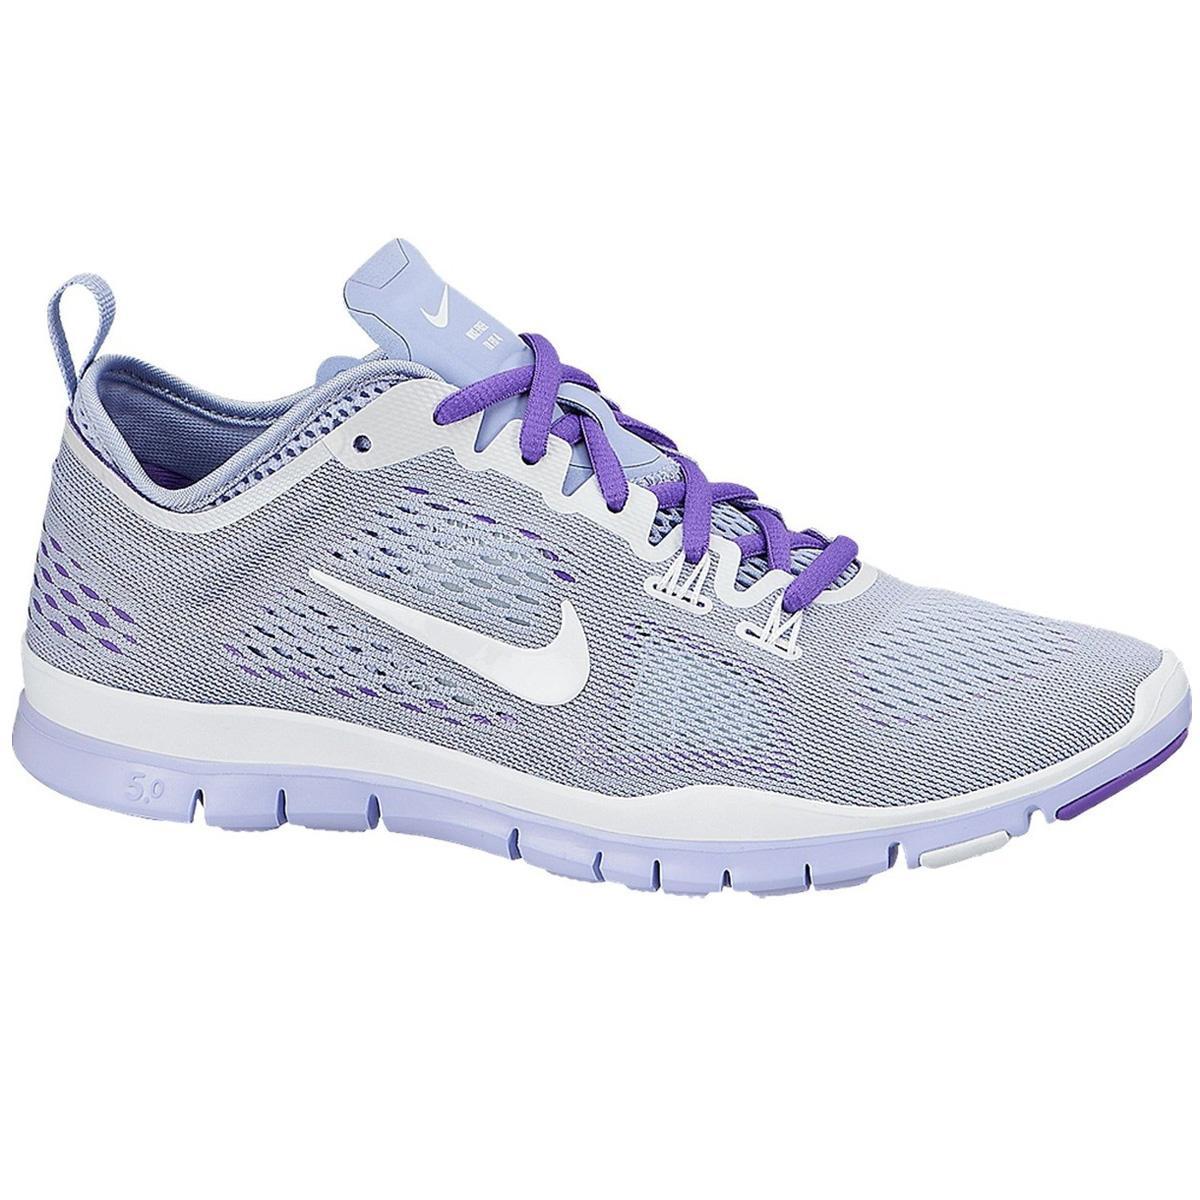 Nike Womens 5.0 TR Fit 4 Breath Training Shoes - Purple/White